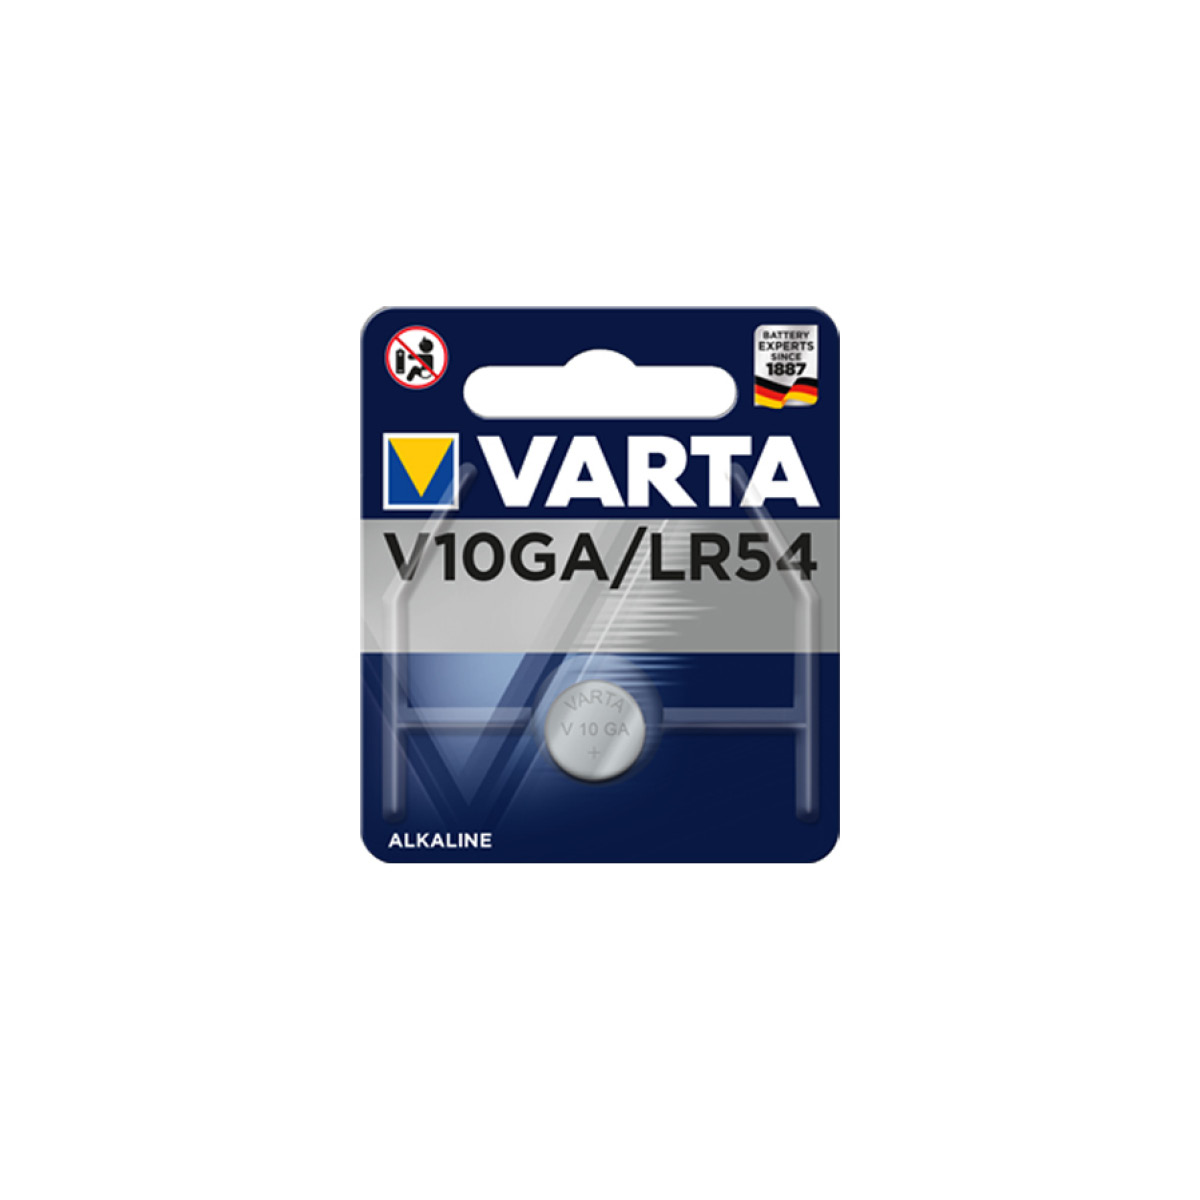 Varta Electronics V 10 GA Knopfzelle